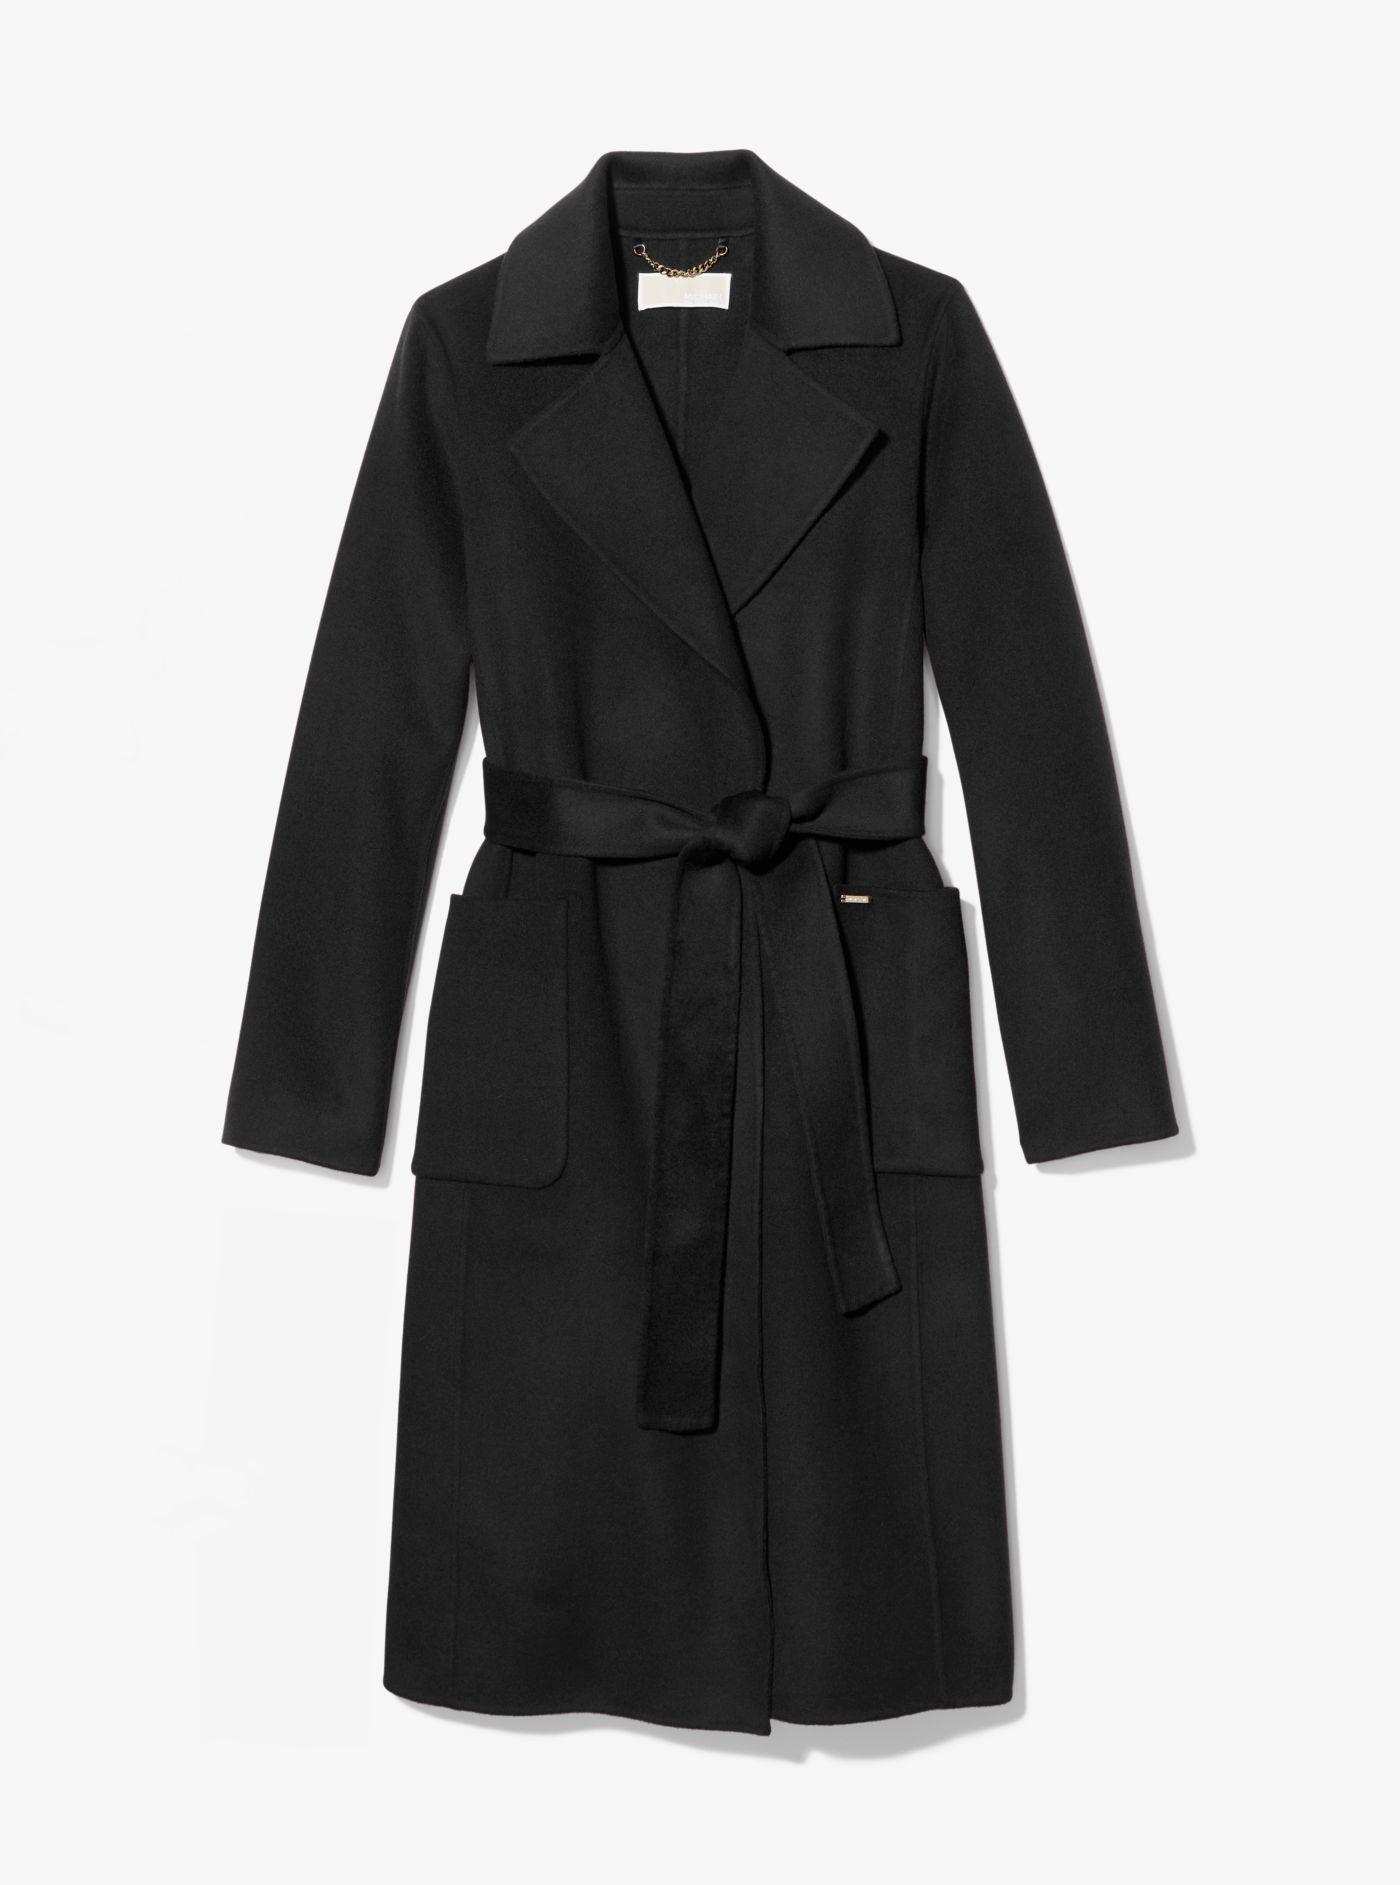 Michael Kors Wool Wrap Coat in Black - Lyst